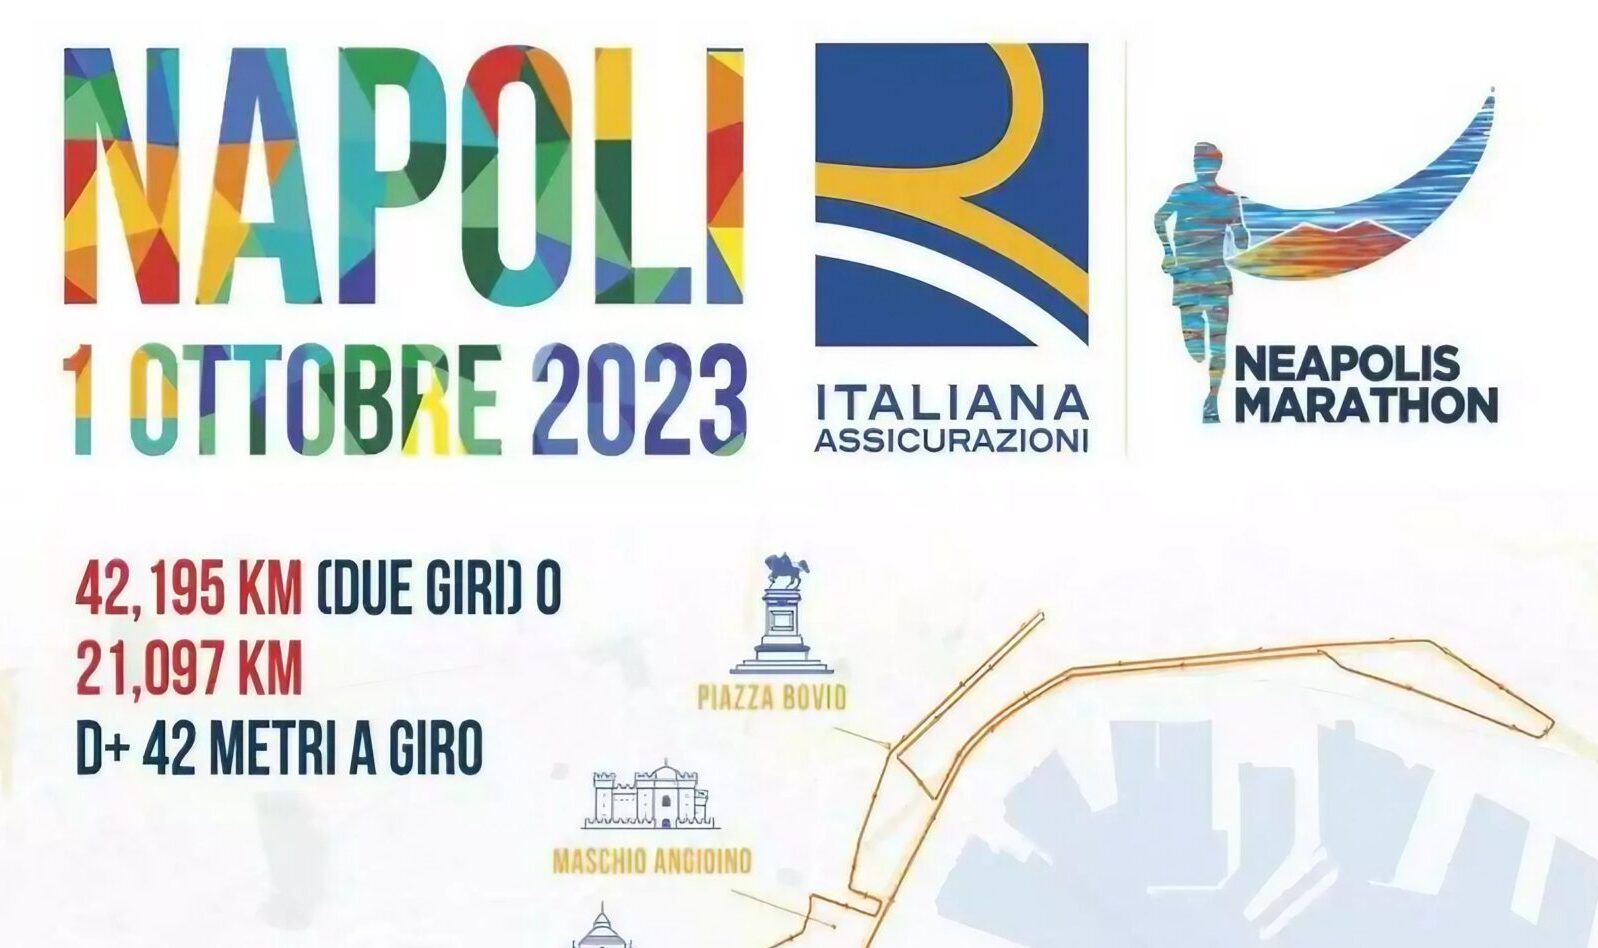 Cartaz da Maratona de Nápoles de 2023